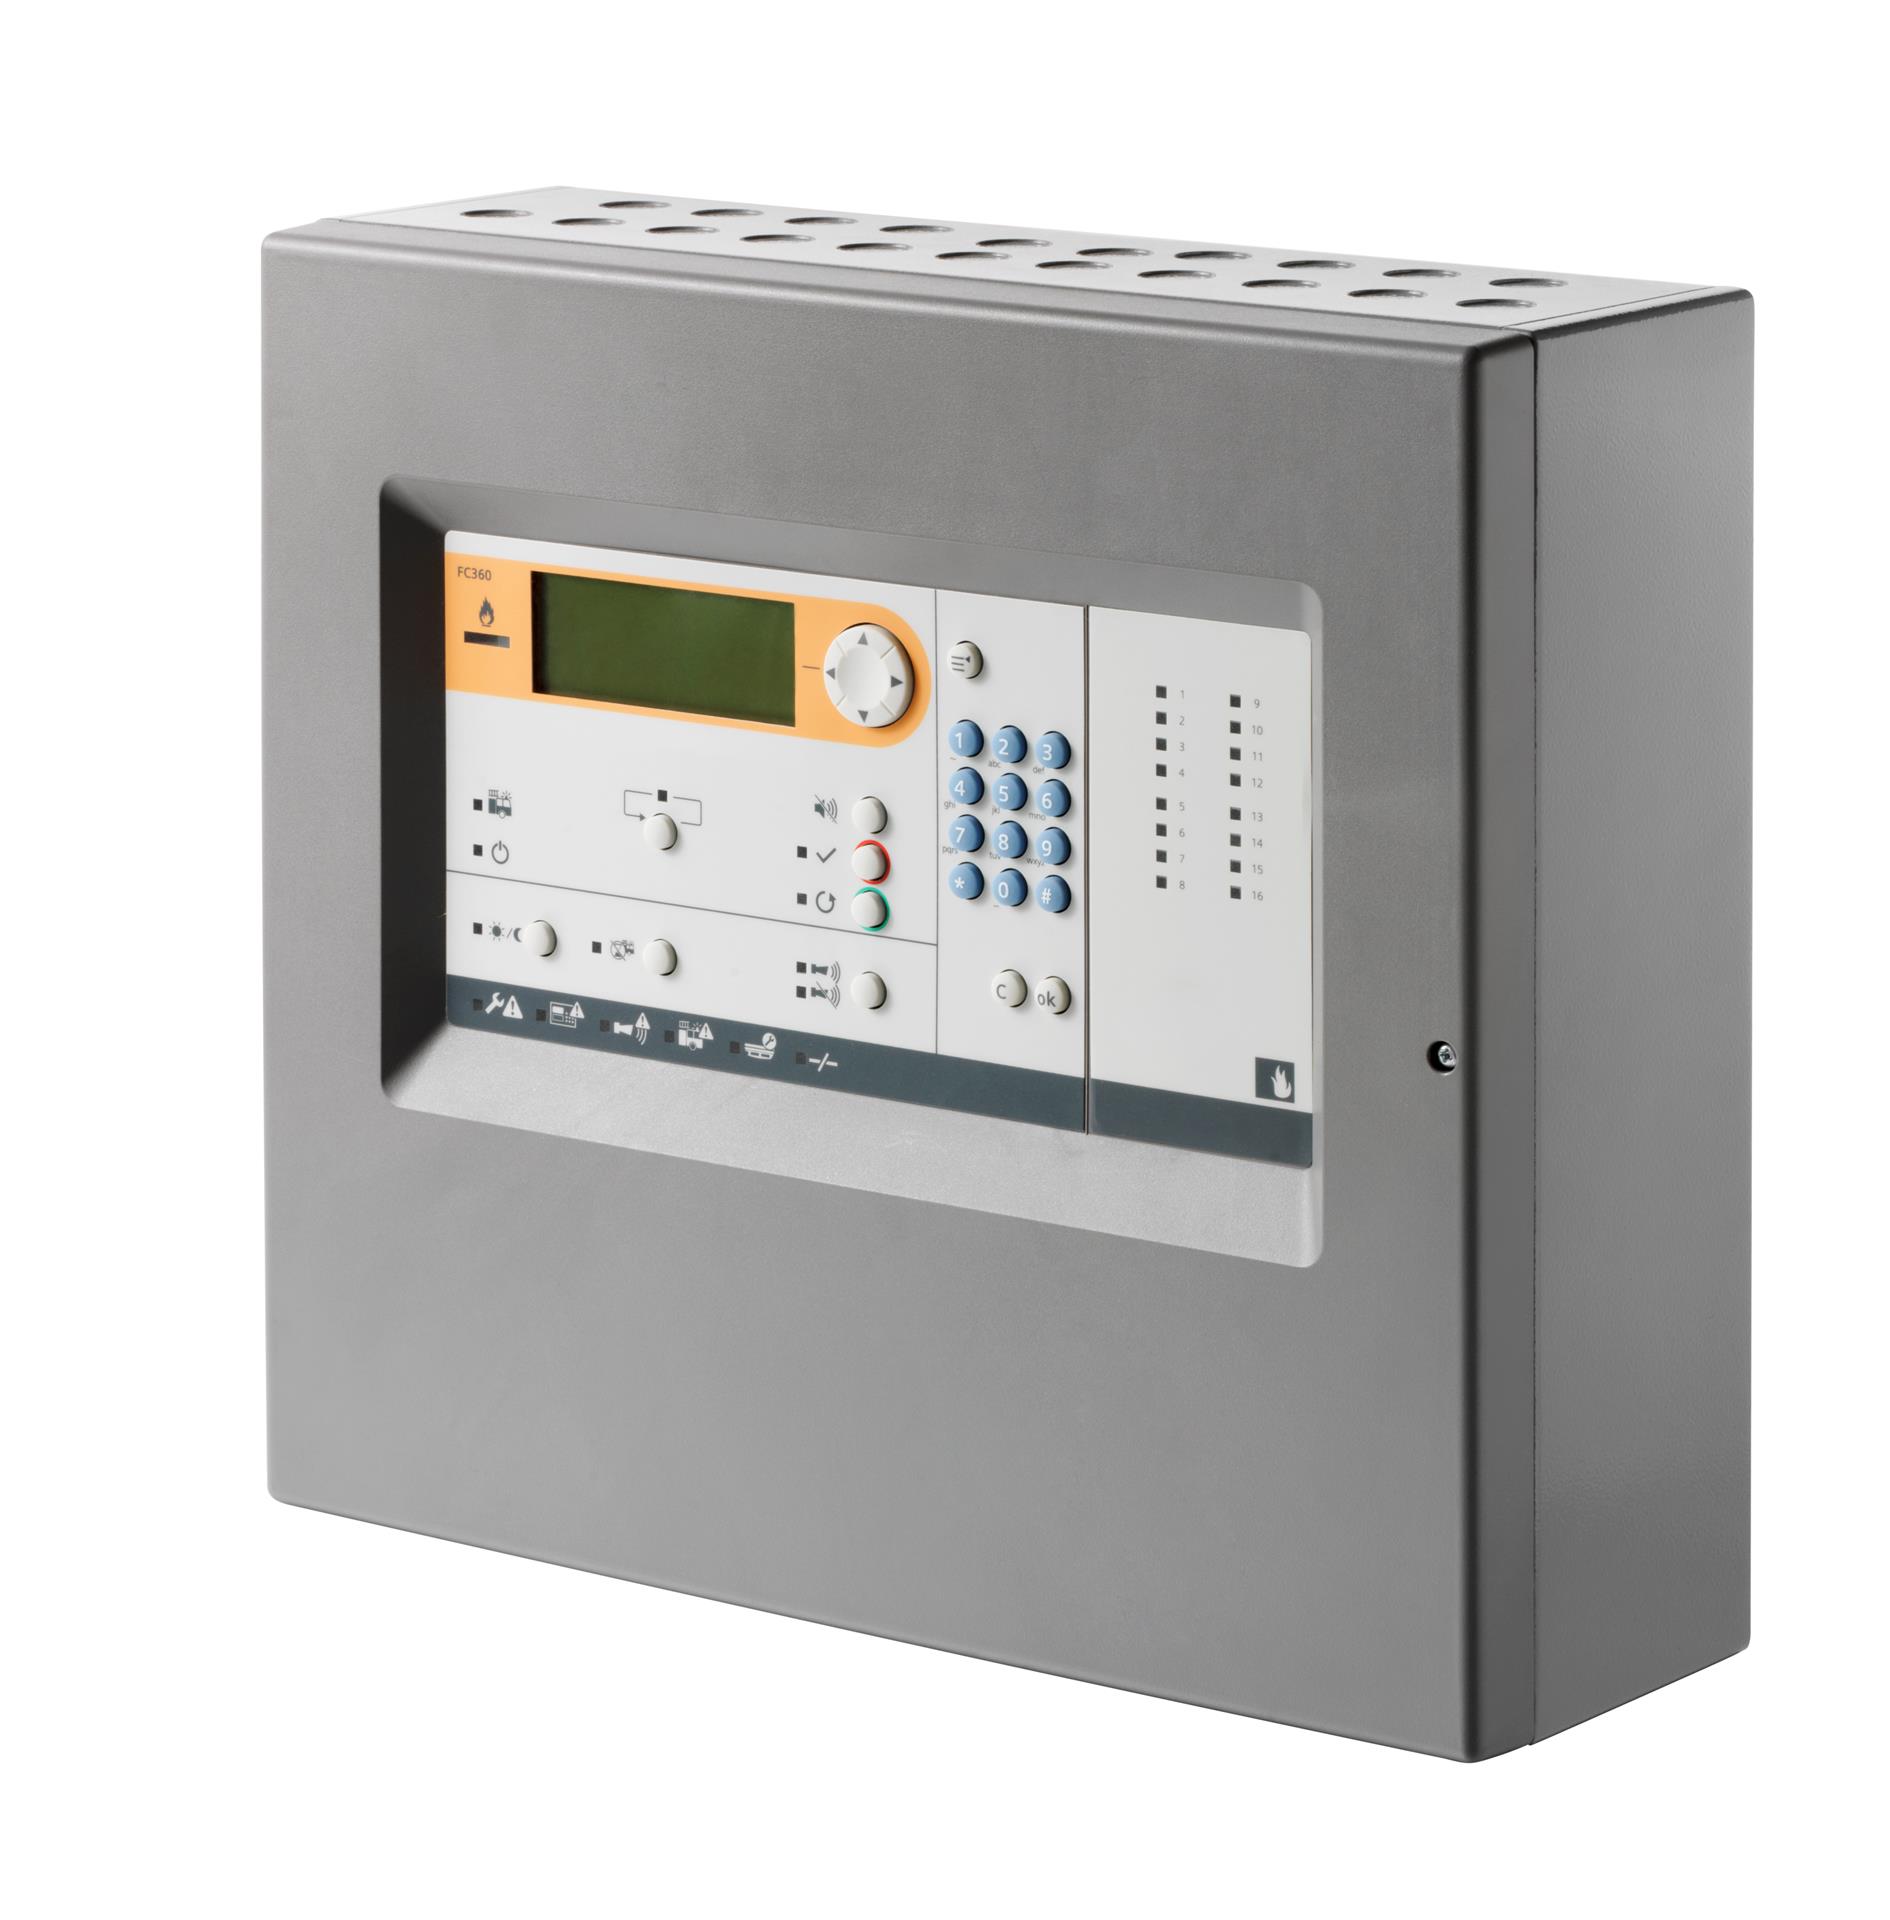 SIEMENS FC361-YA Cerberus FIT İnteraktif Yangın Algılama ve Alarm Kontrol Paneli – Konfor Kasa ve LED Indicator (1 loop, 126 adres)